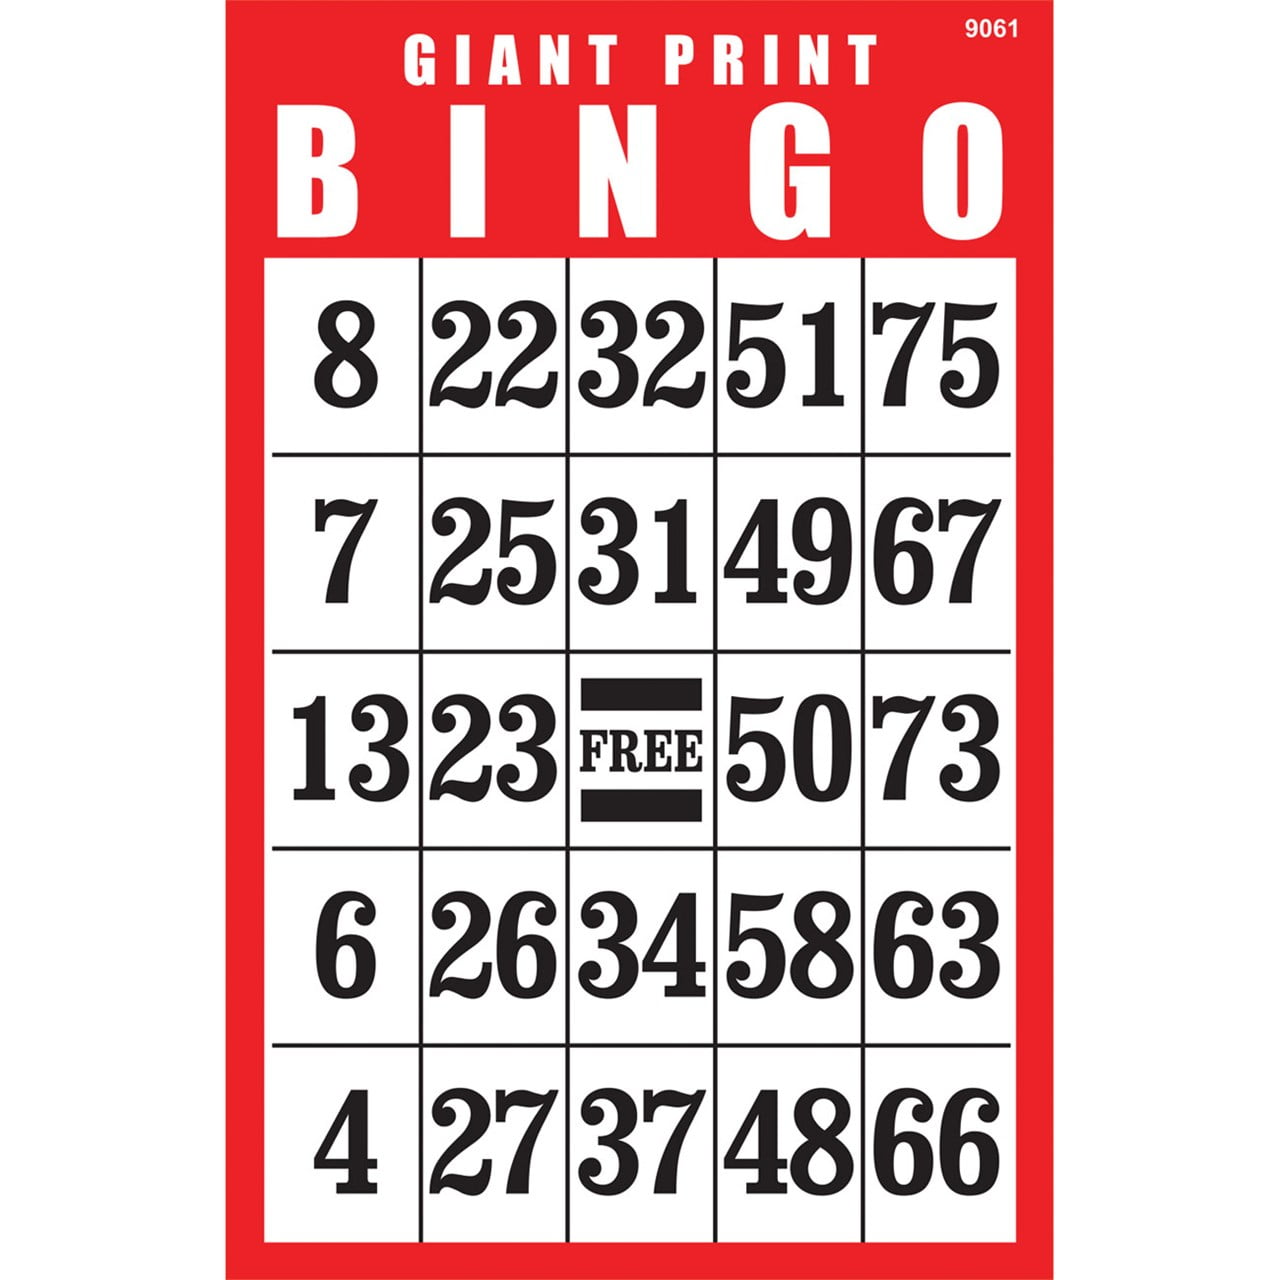 giant-print-laminated-bingo-card-red-walmart